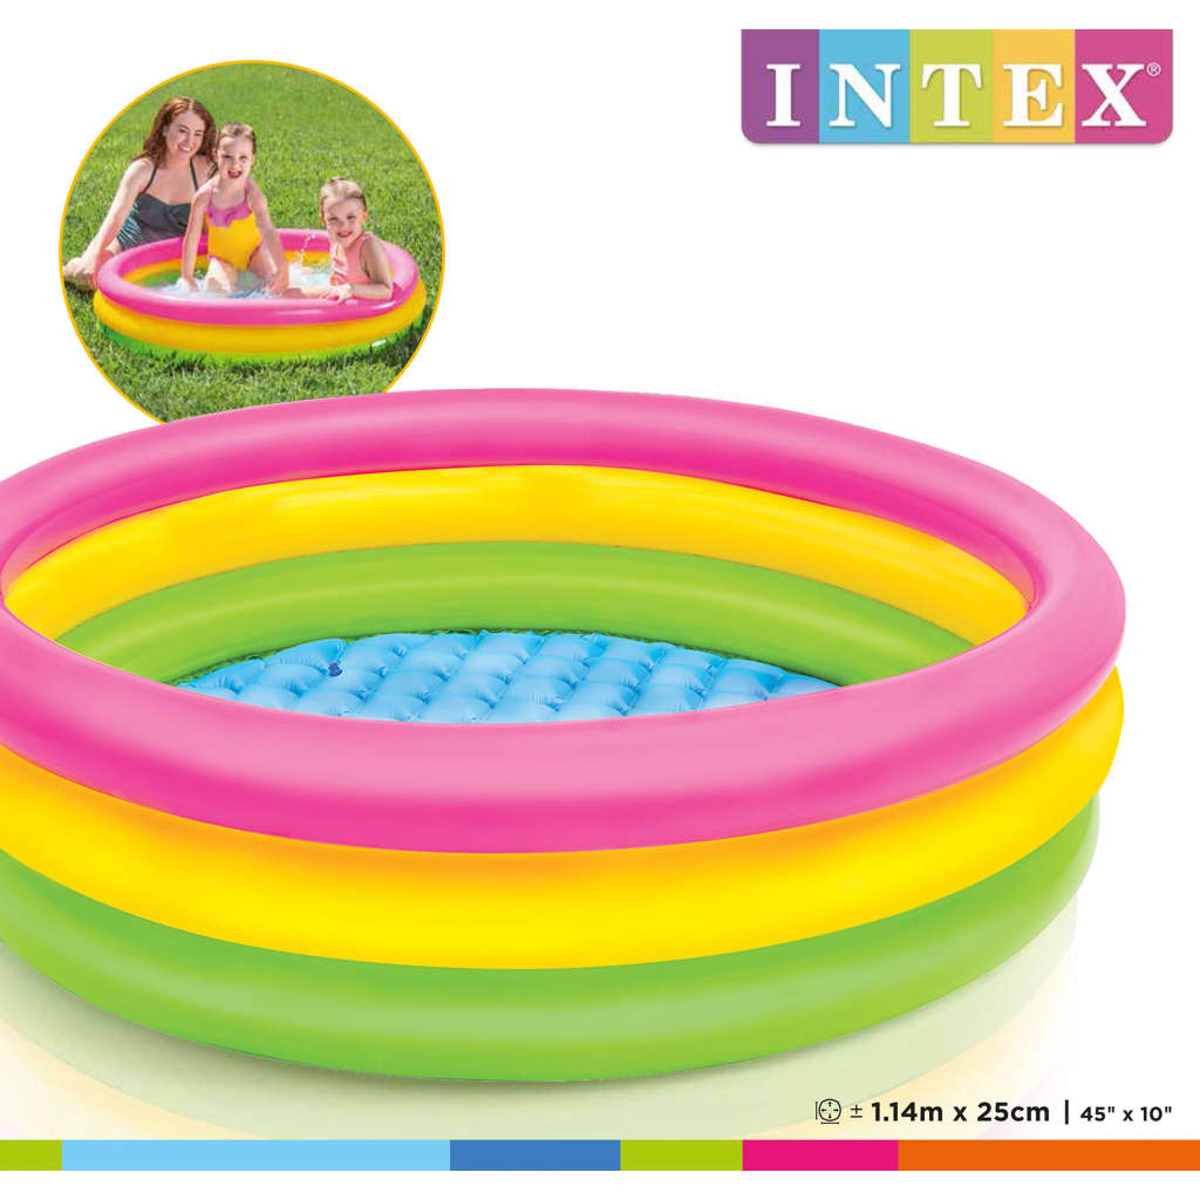 INTEX 3202895 Pool, Mehrfarbig